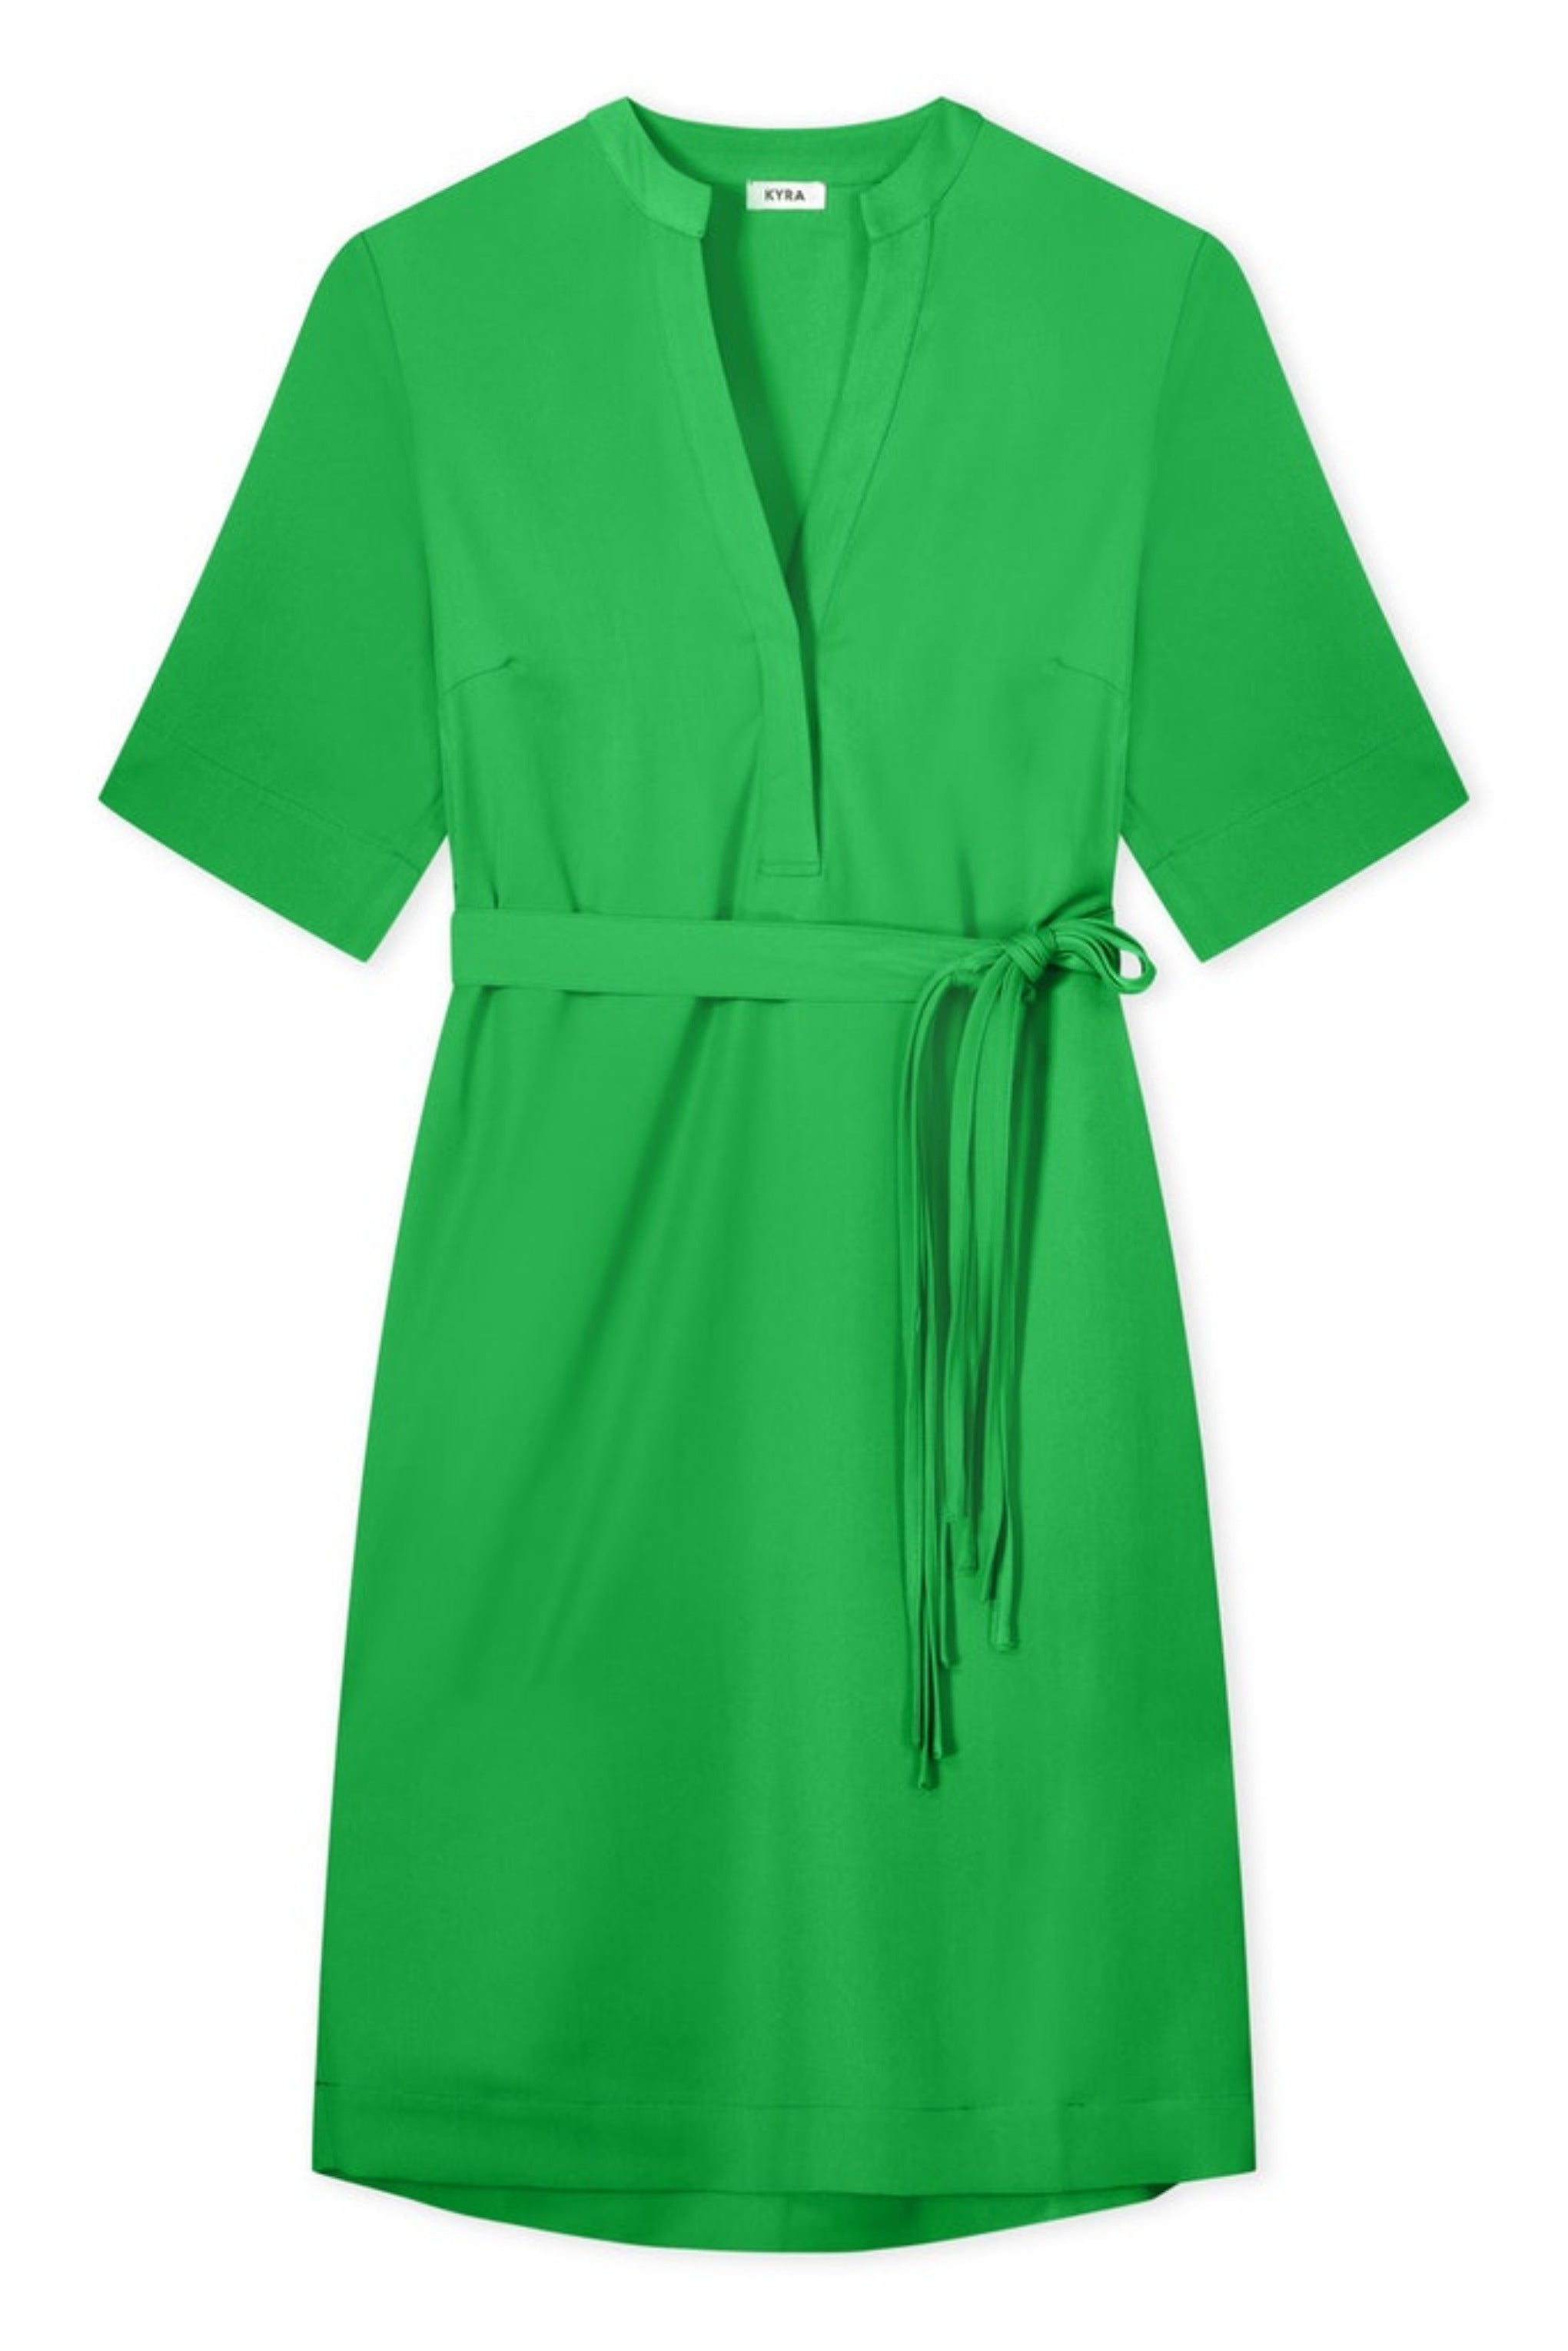 Ingrid Short Sleeve Dress with Belt - Fern Green